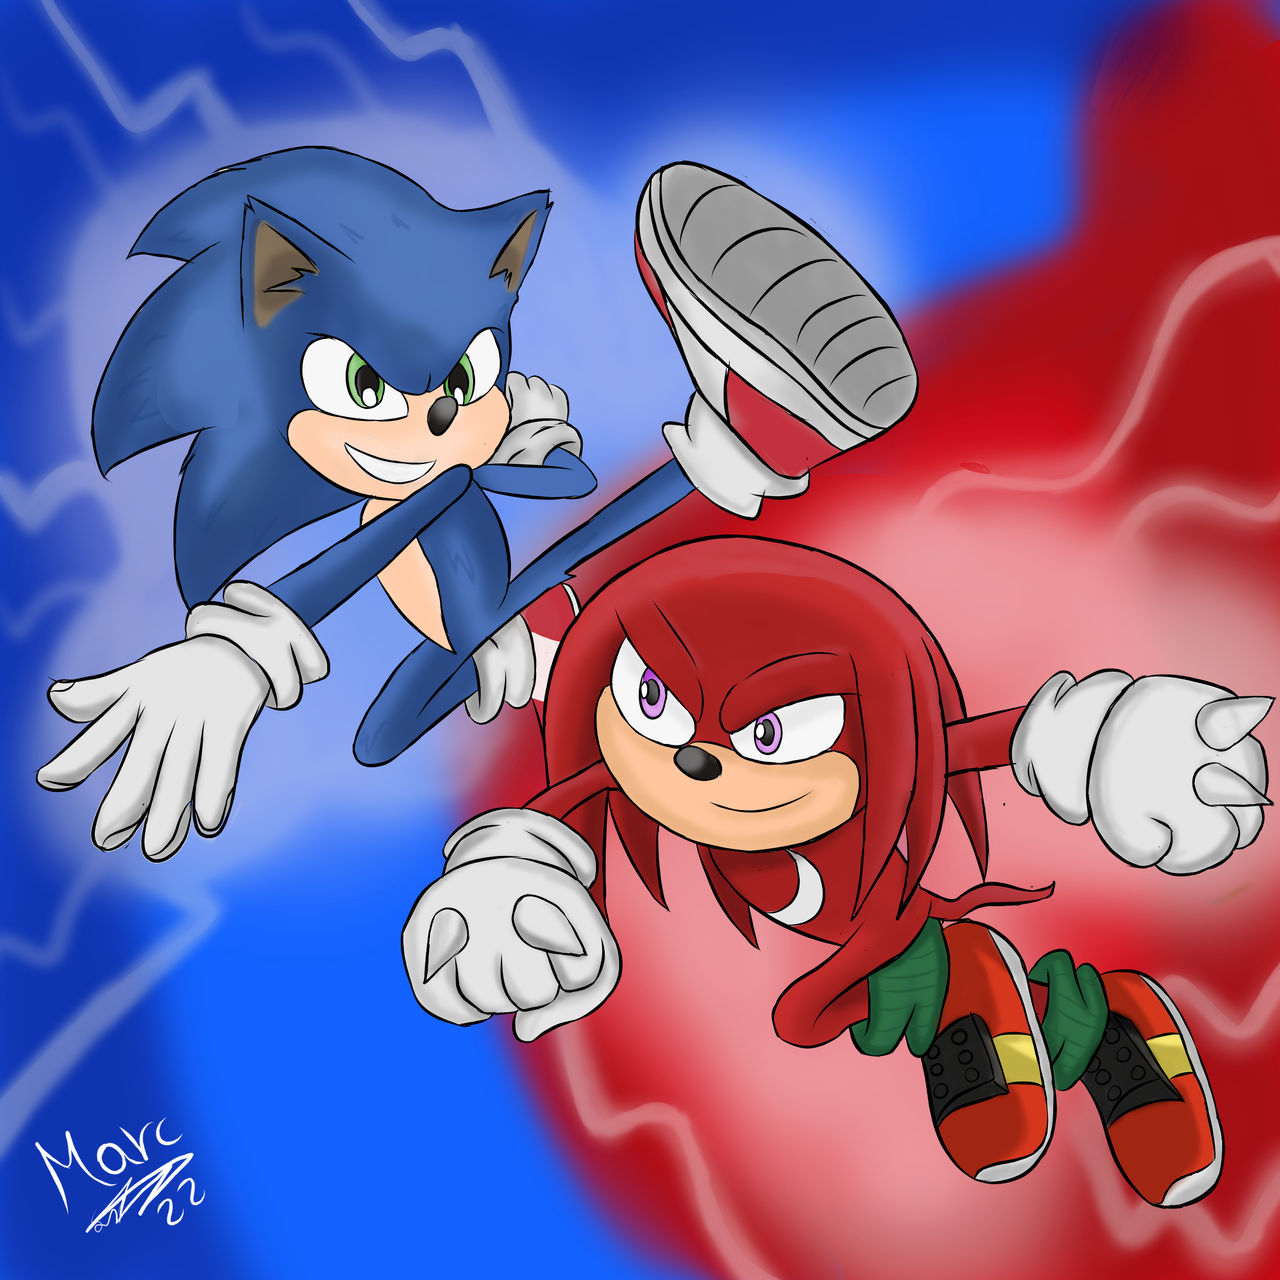 Sonic Vs Knuckles by MarcDibujante on DeviantArt